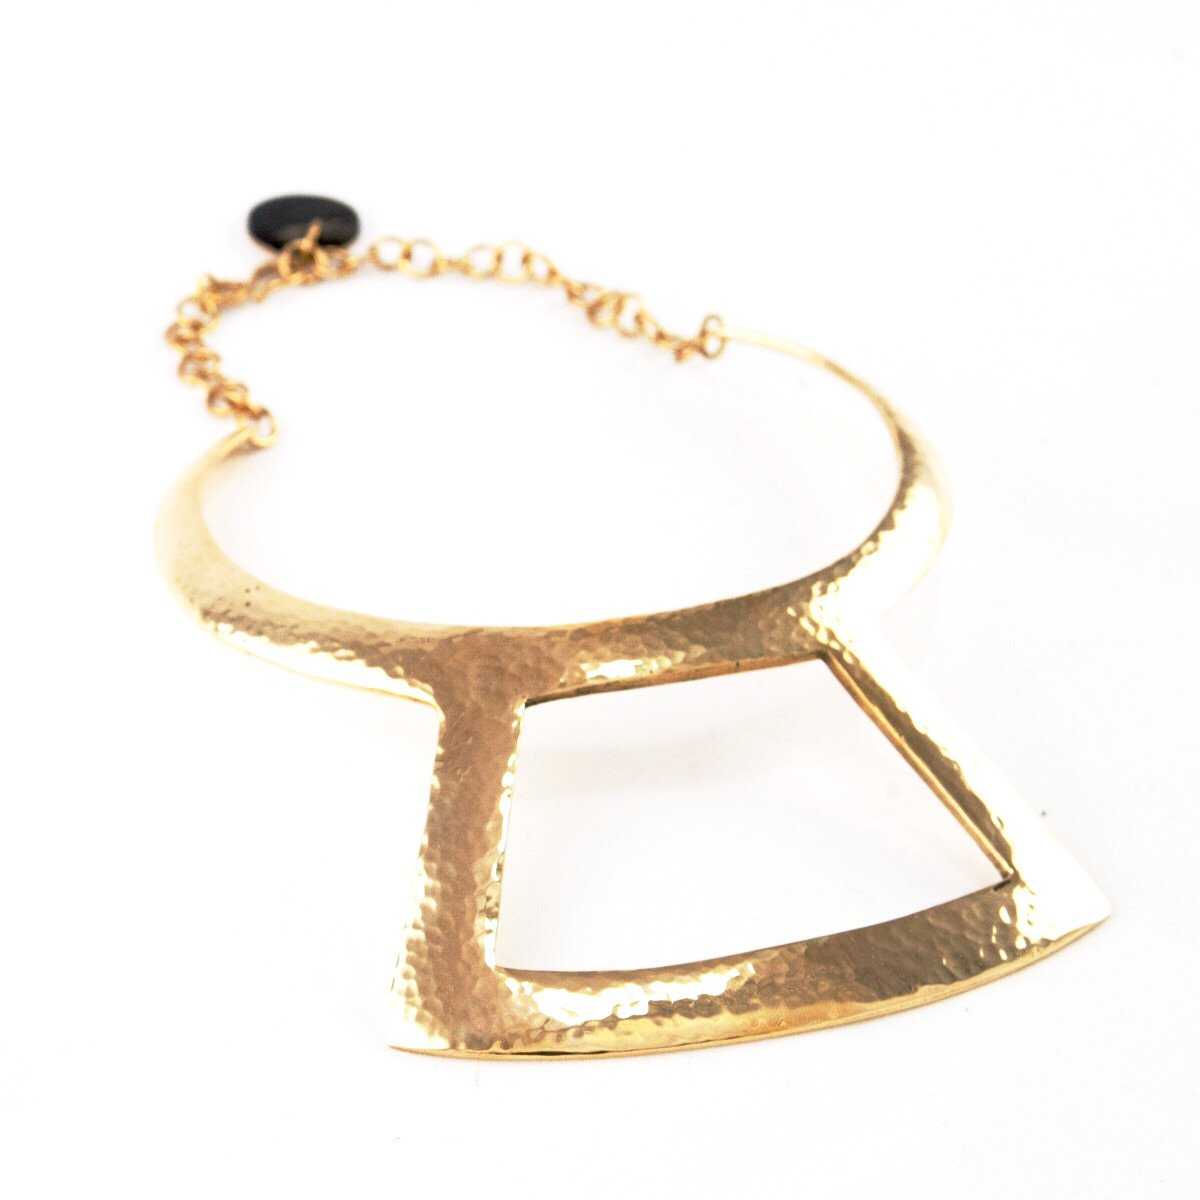 Hammered Triangular Brass Necklace - JUICY JEWELRY